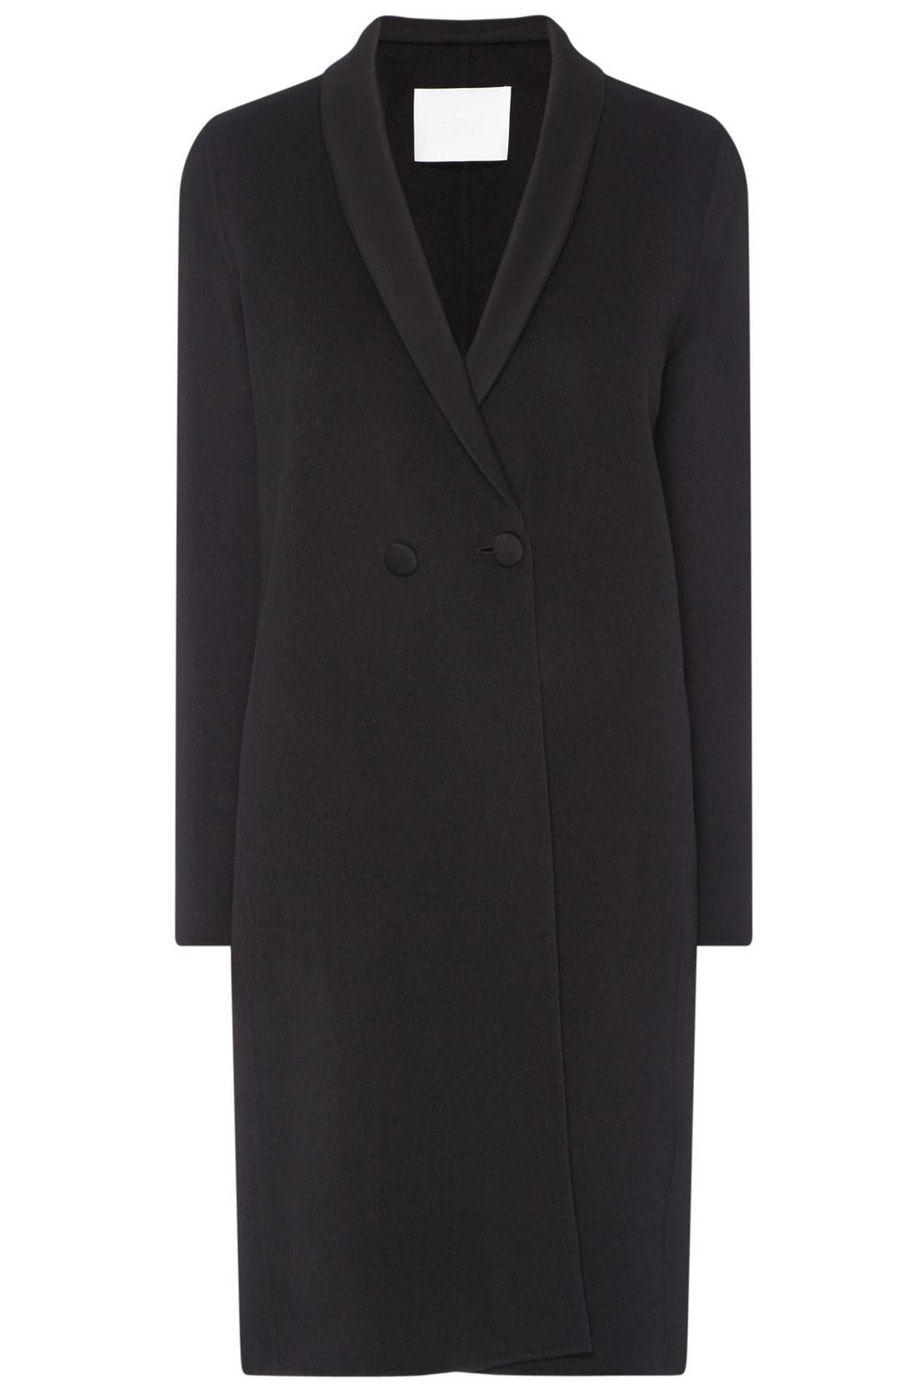 BOSS Hugo Boss Cortalea black tuxedo coat